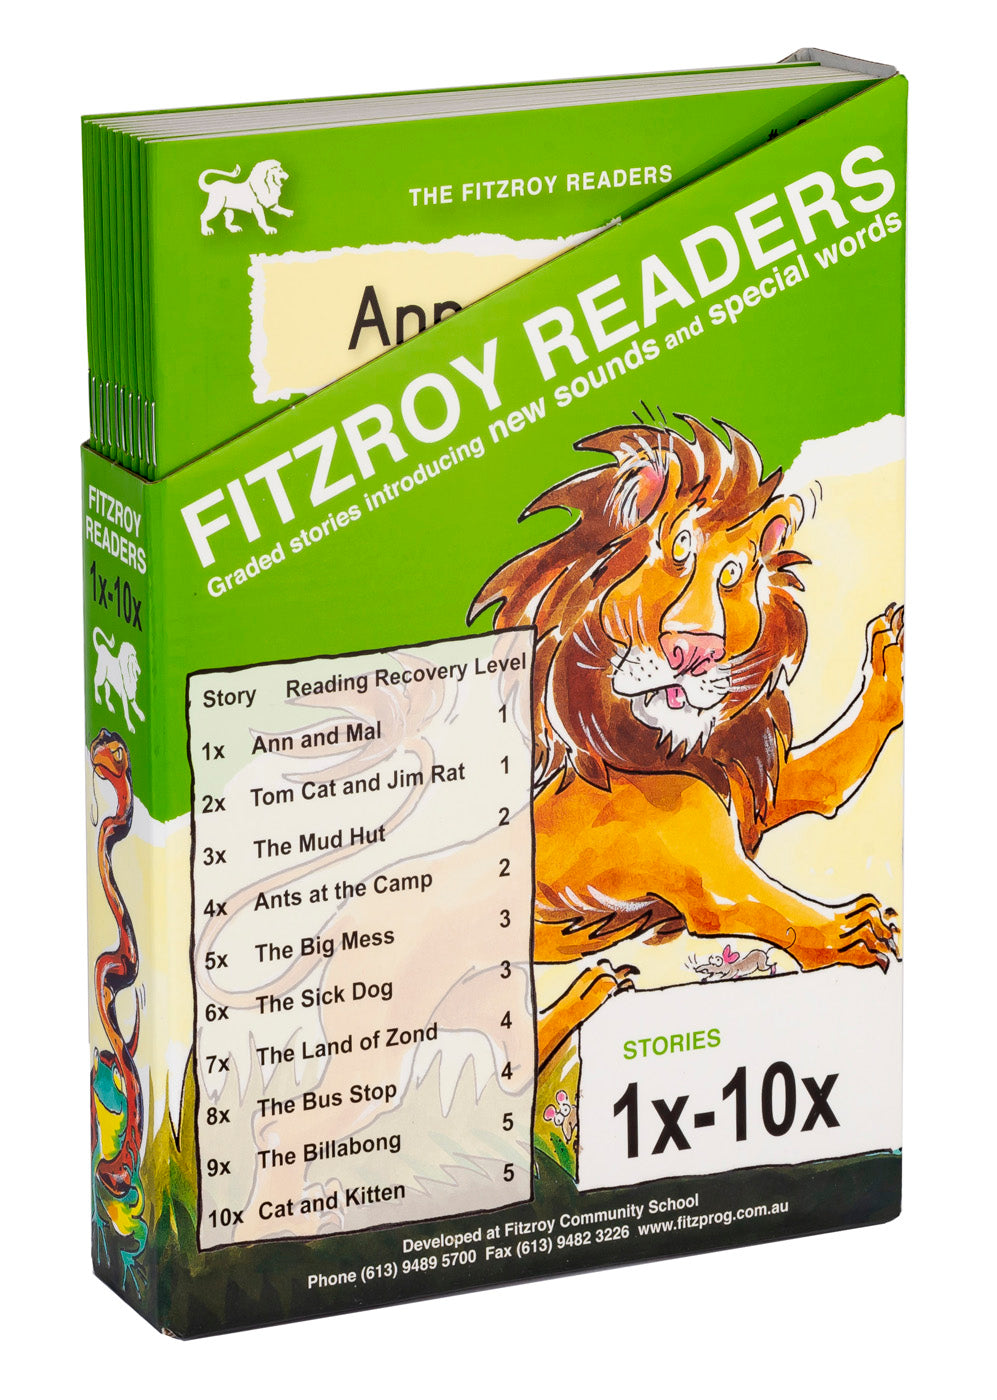 Fitzroy Readers 1x-10x